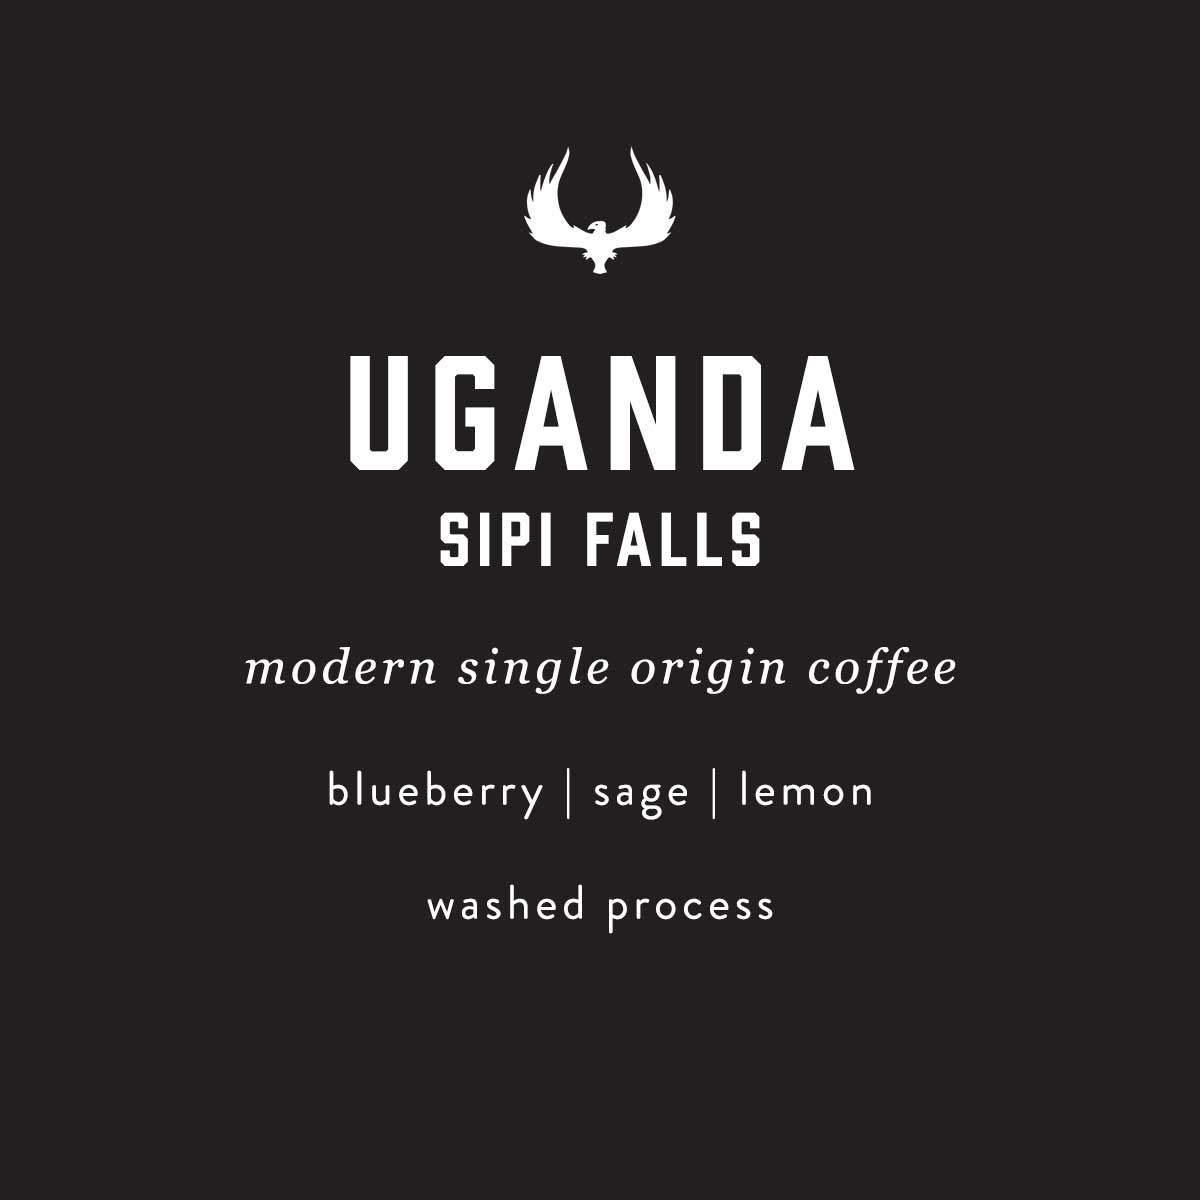 Uganda Specialty Coffee by Press Coffee Roasters